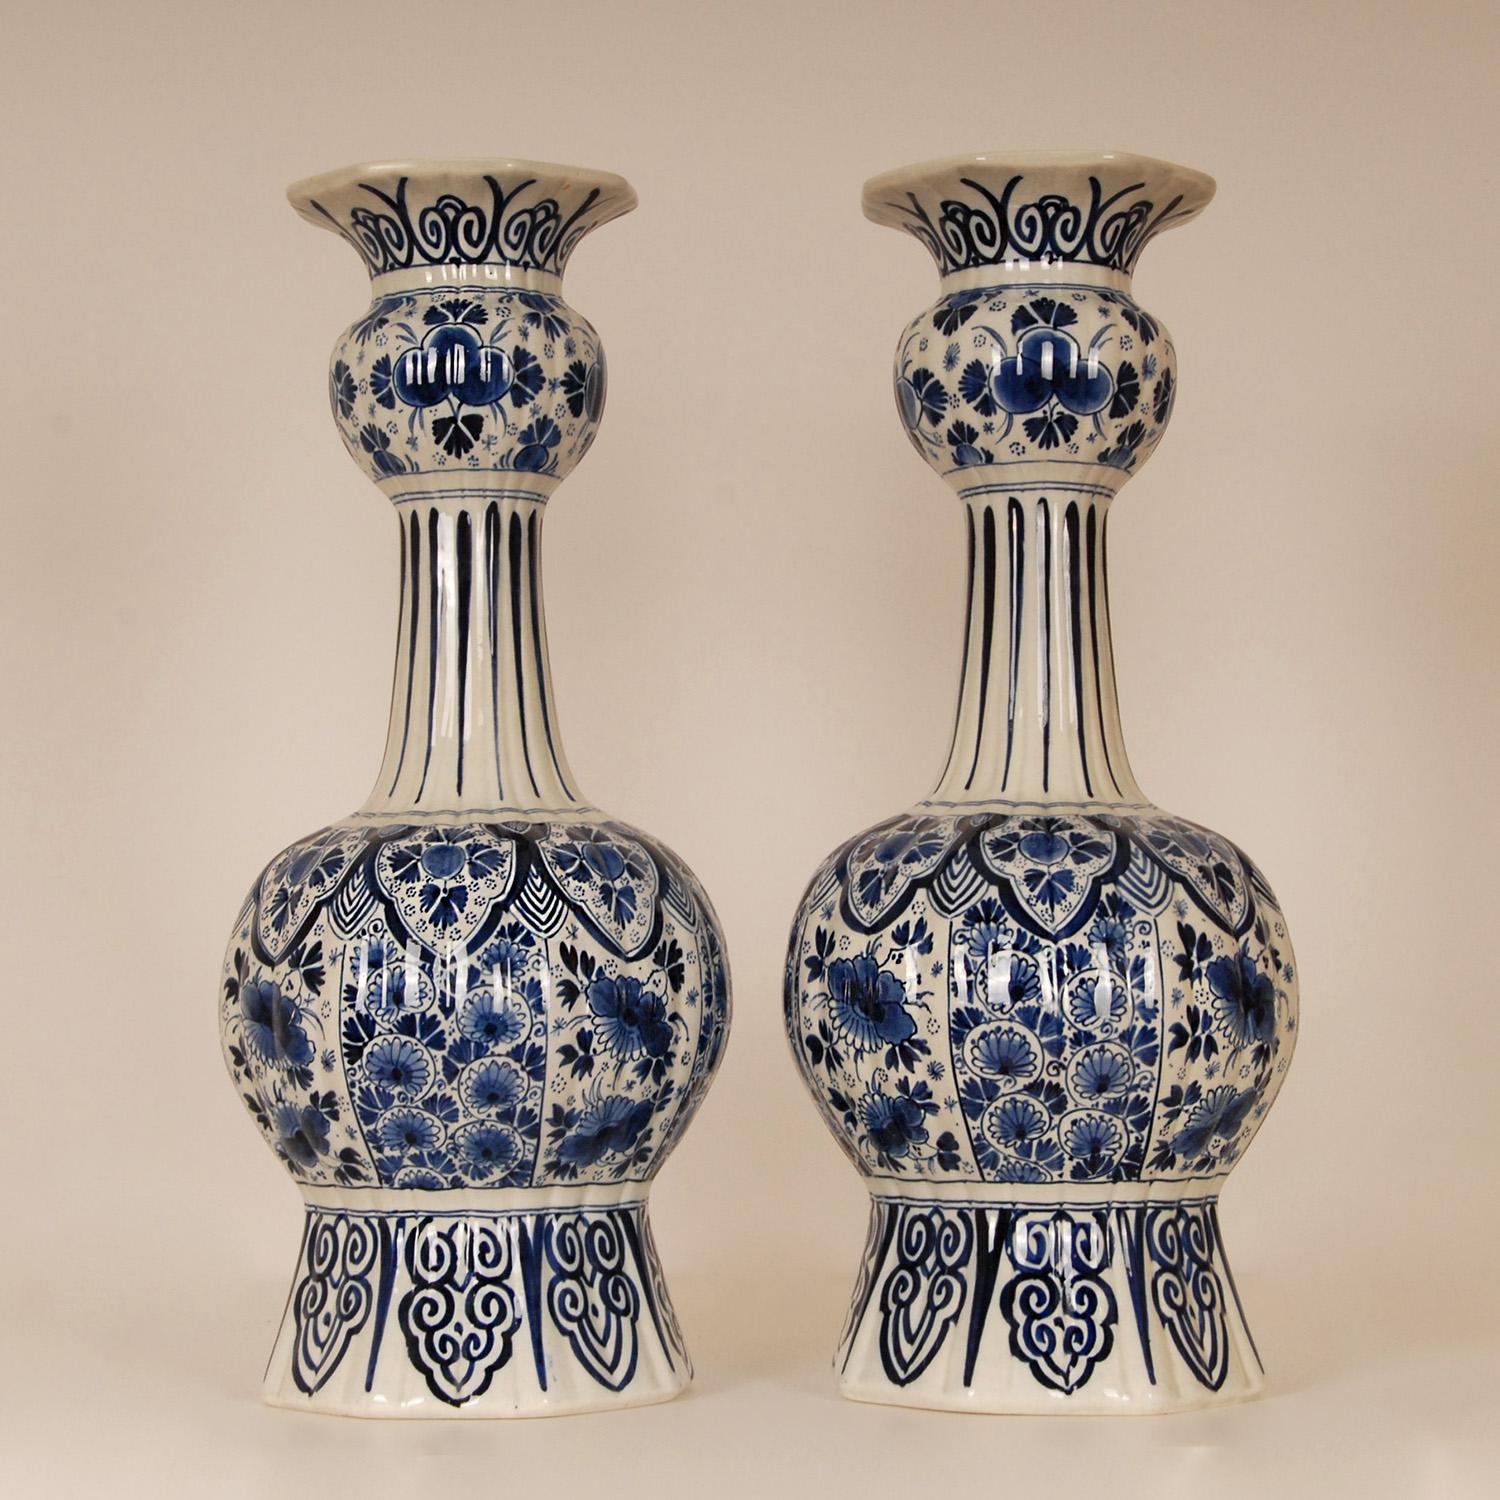 Dutch Antique Royal Delft Vases Chinoiserie Blue White Knobble Vases Earthenware pair For Sale